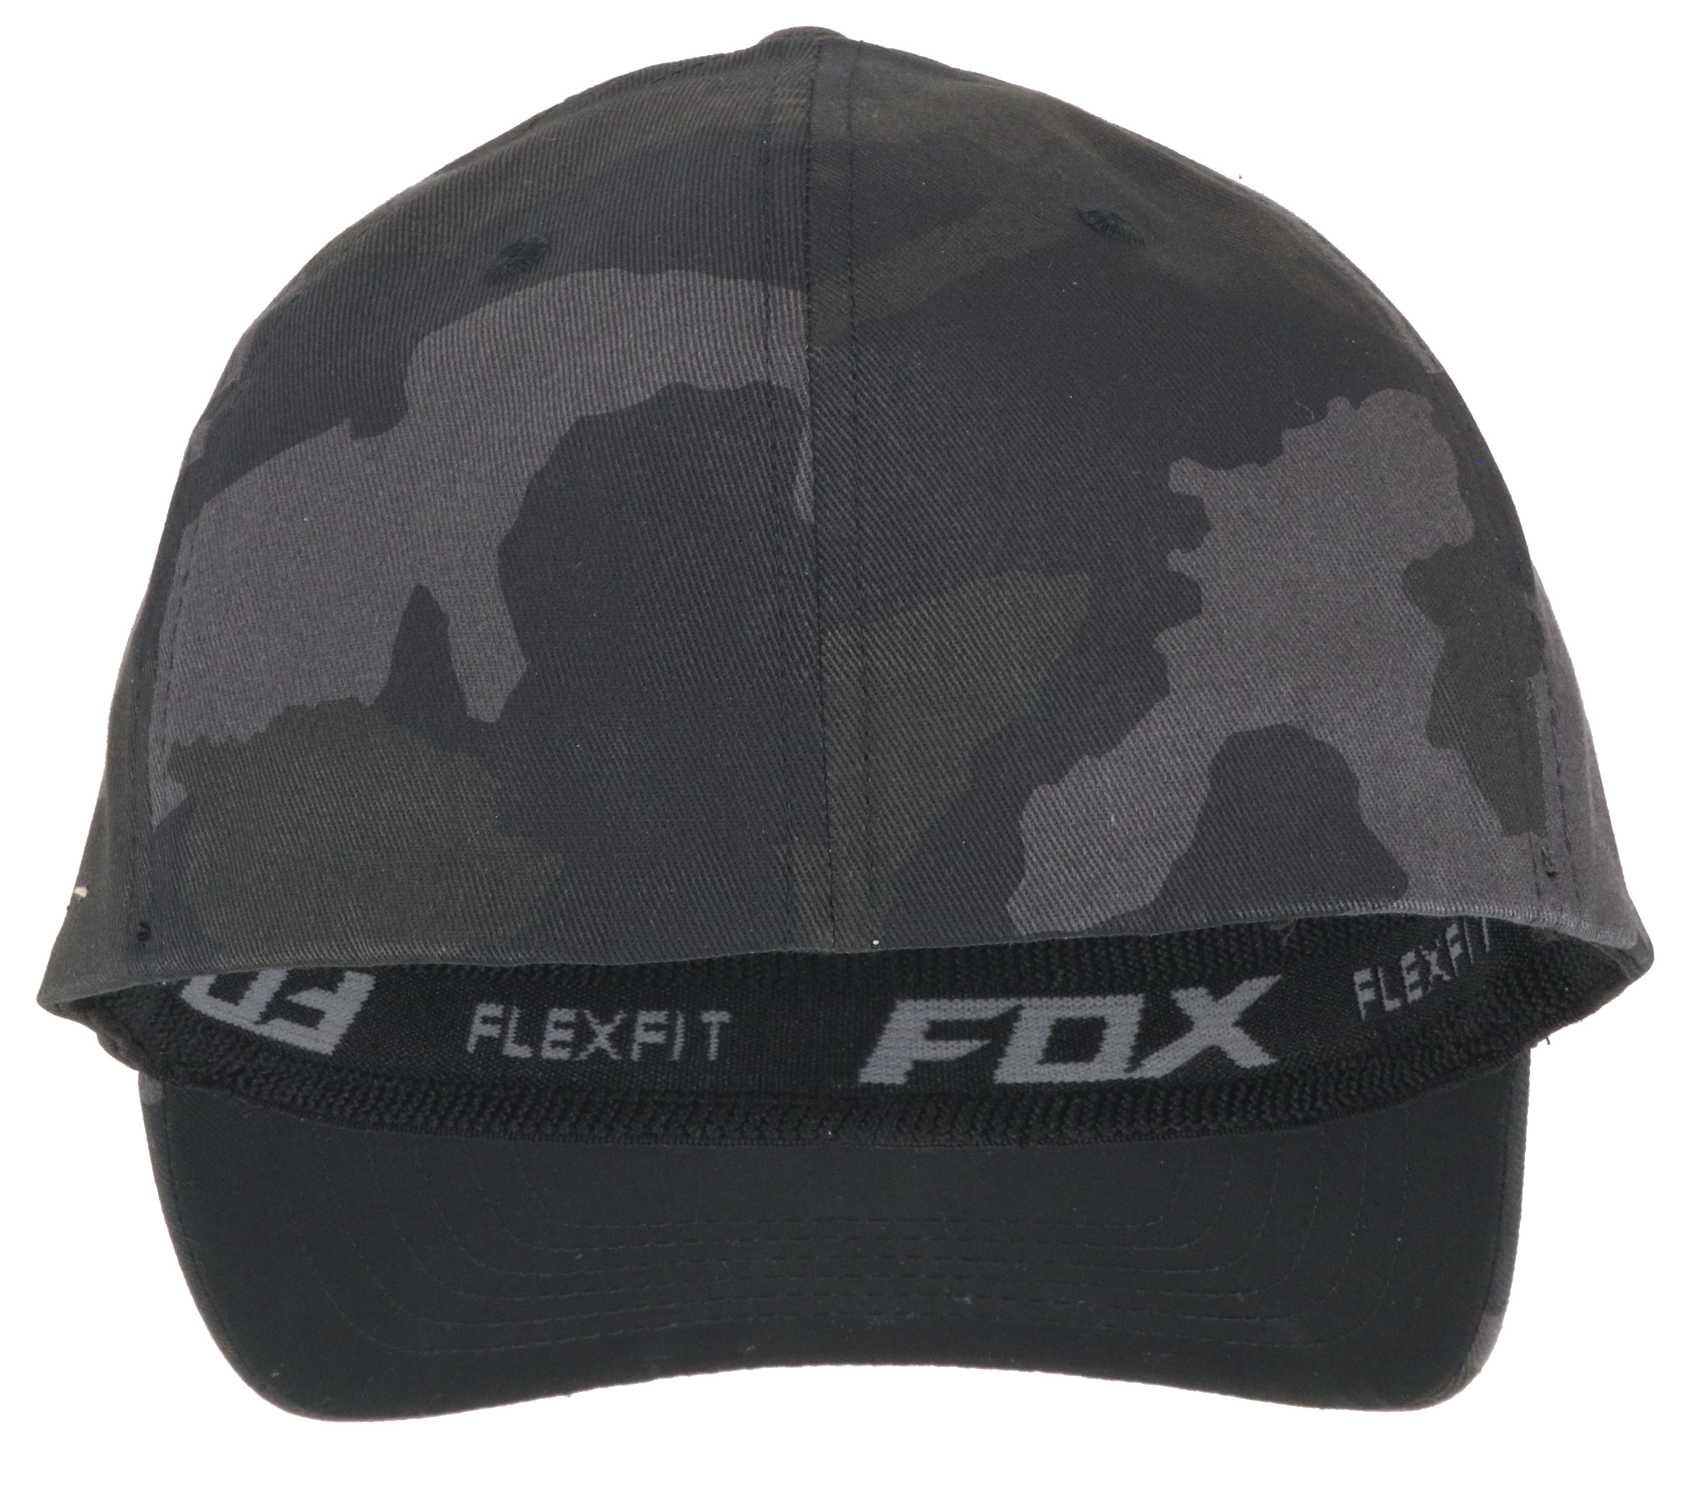 Session Flexfit Hat Fox Racing